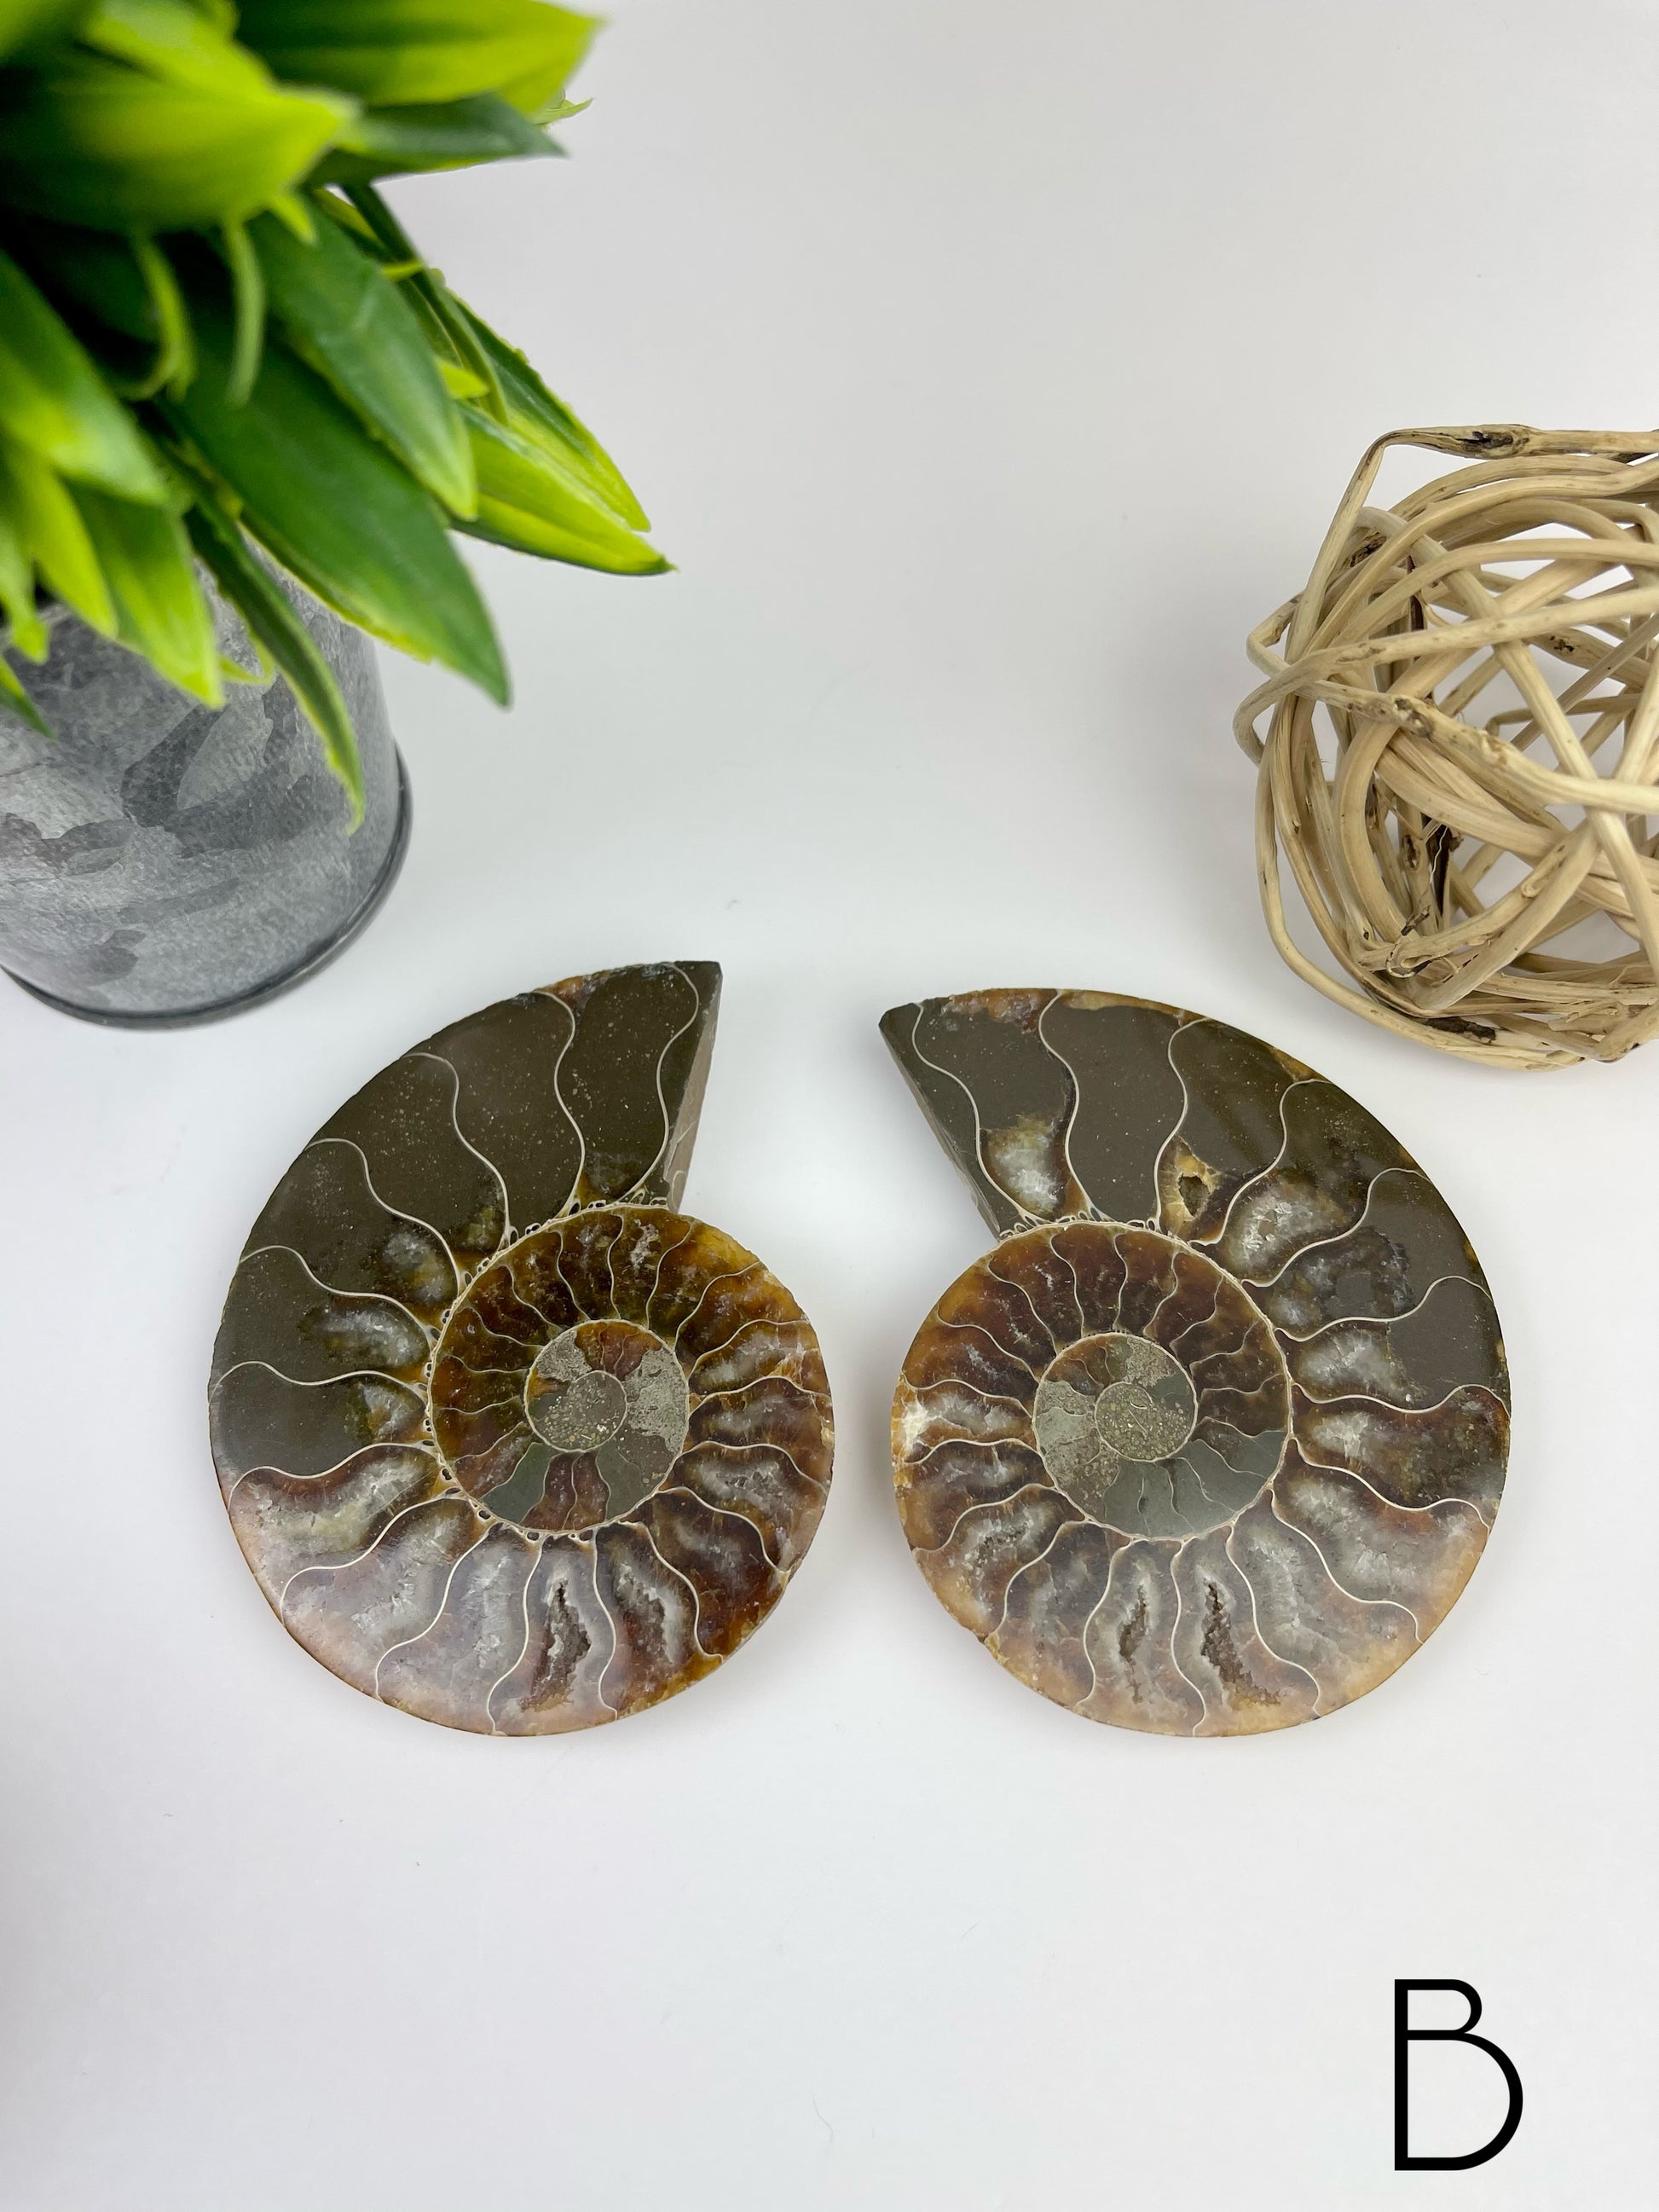 Ammonite Split Fossils Pair B